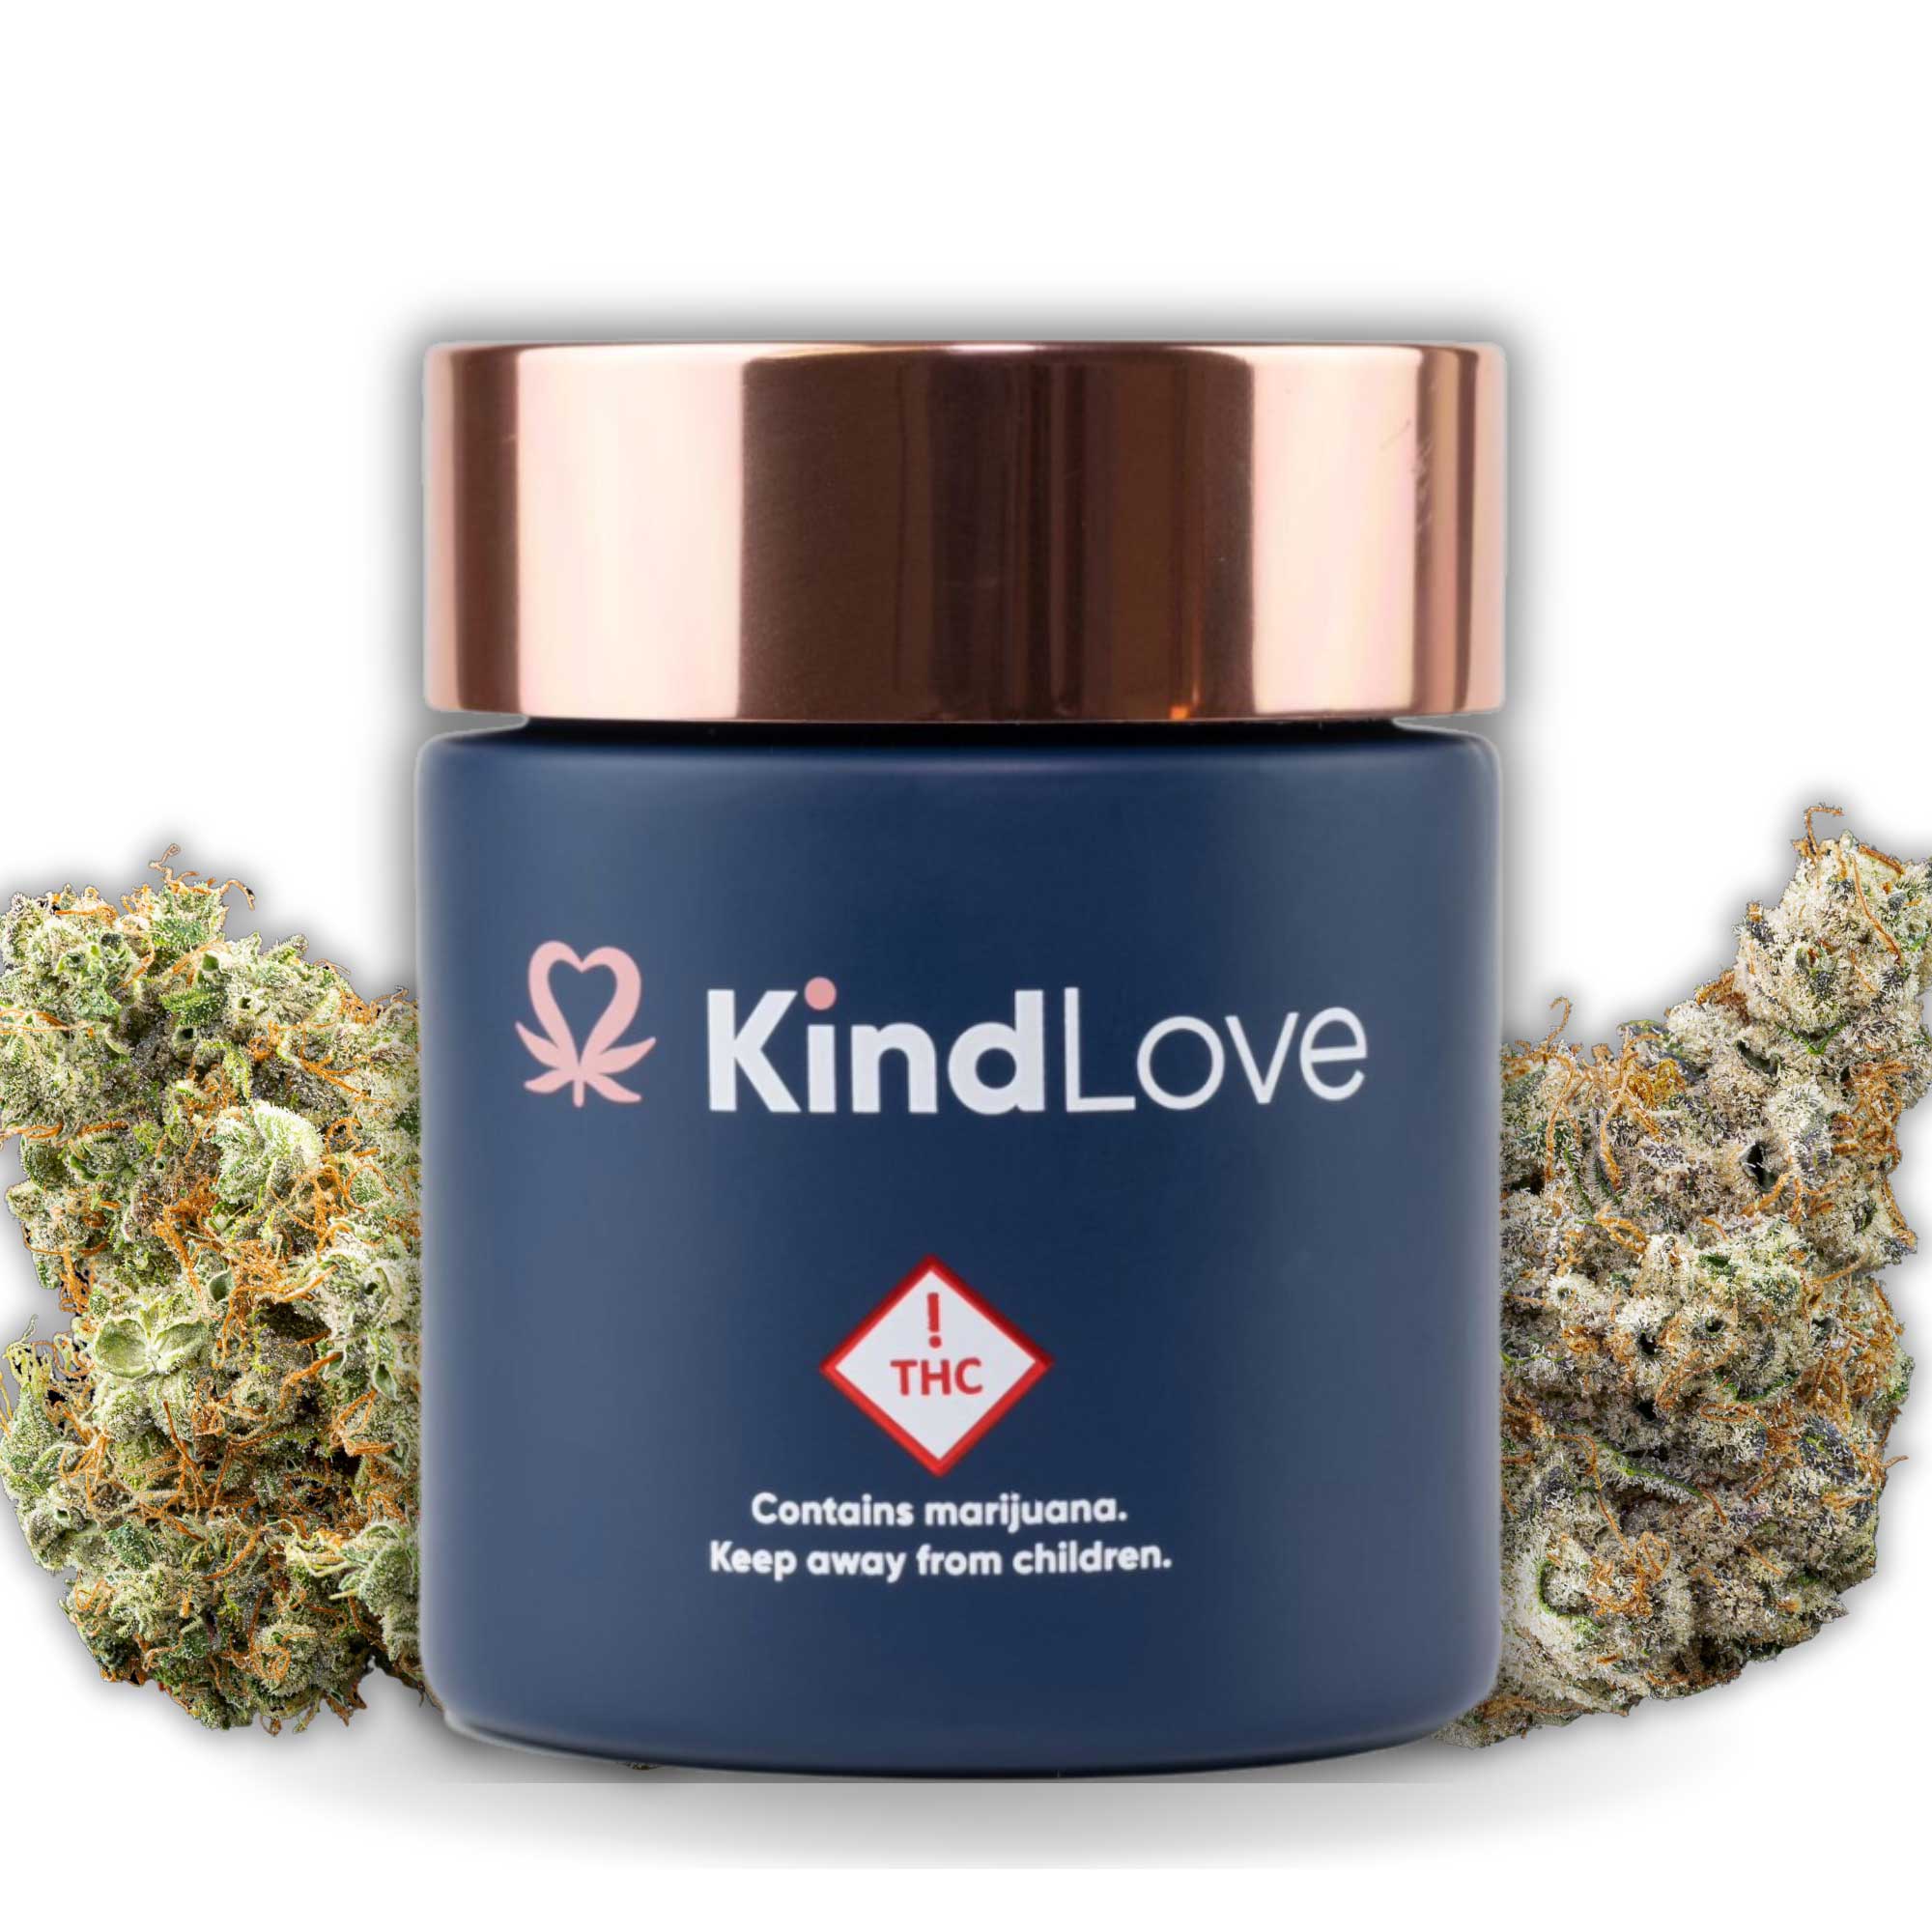 kind love cannabis jar